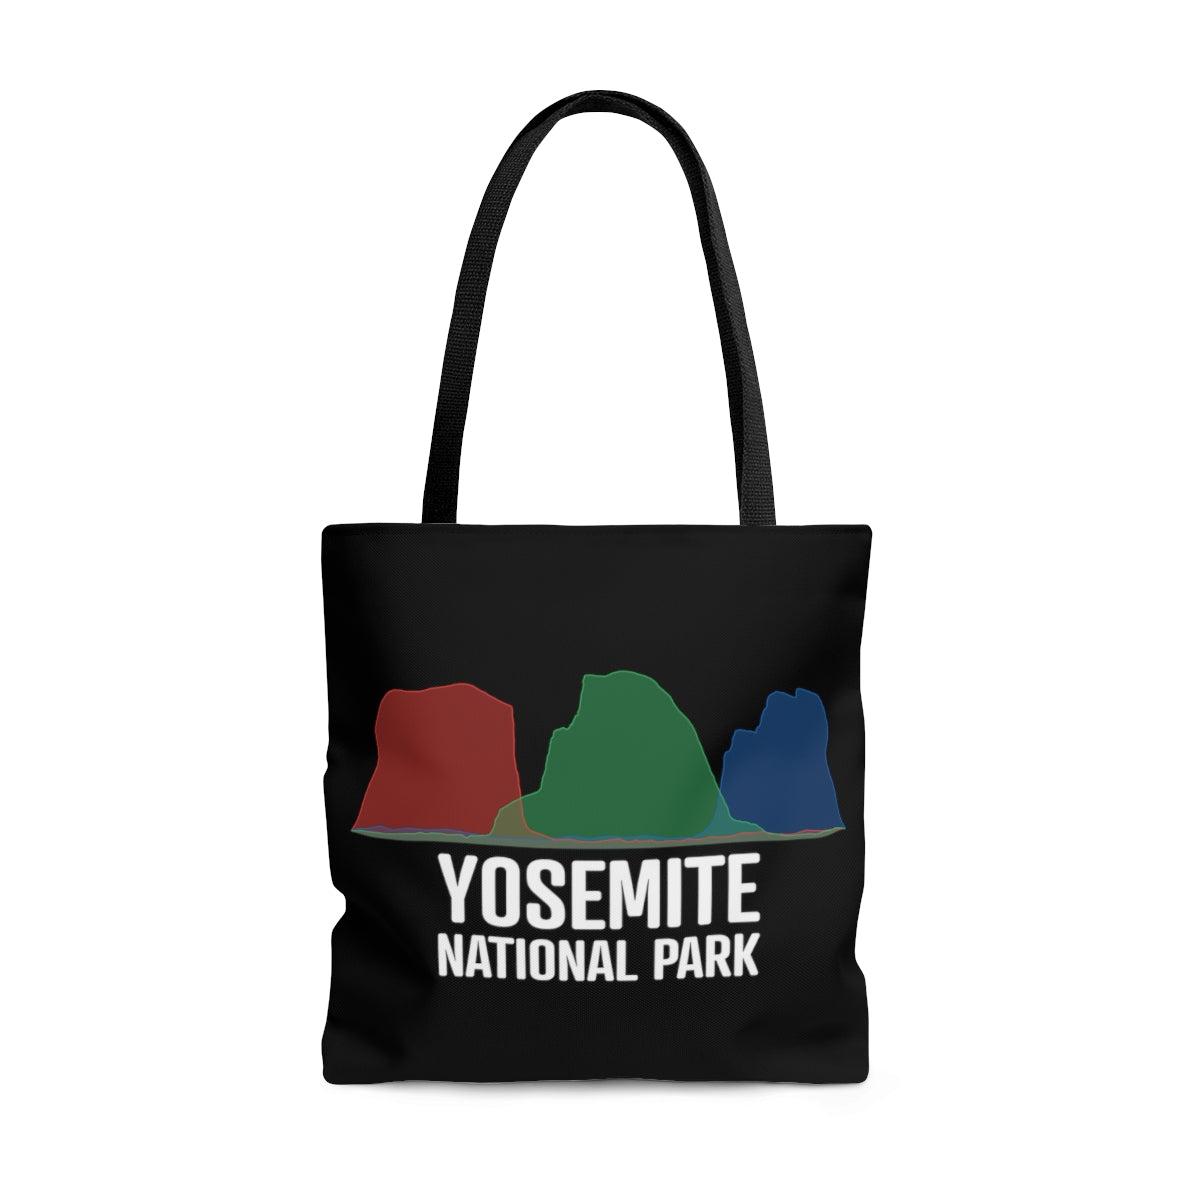 Yosemite National Park Tote Bag - Histogram